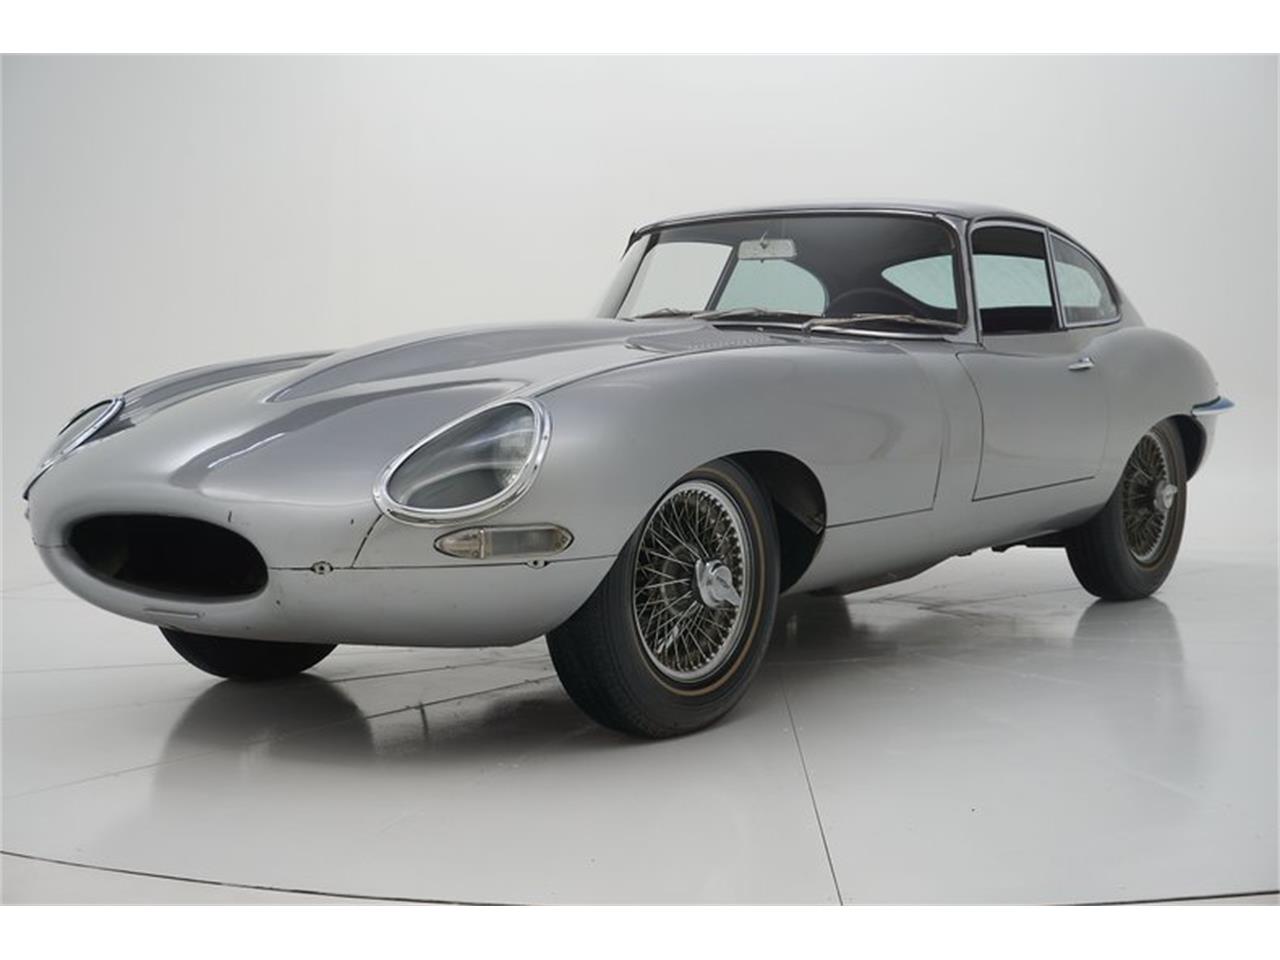 For Sale: 1967 Jaguar E-Type in St Louis, Missouri for sale in Saint Louis, MO